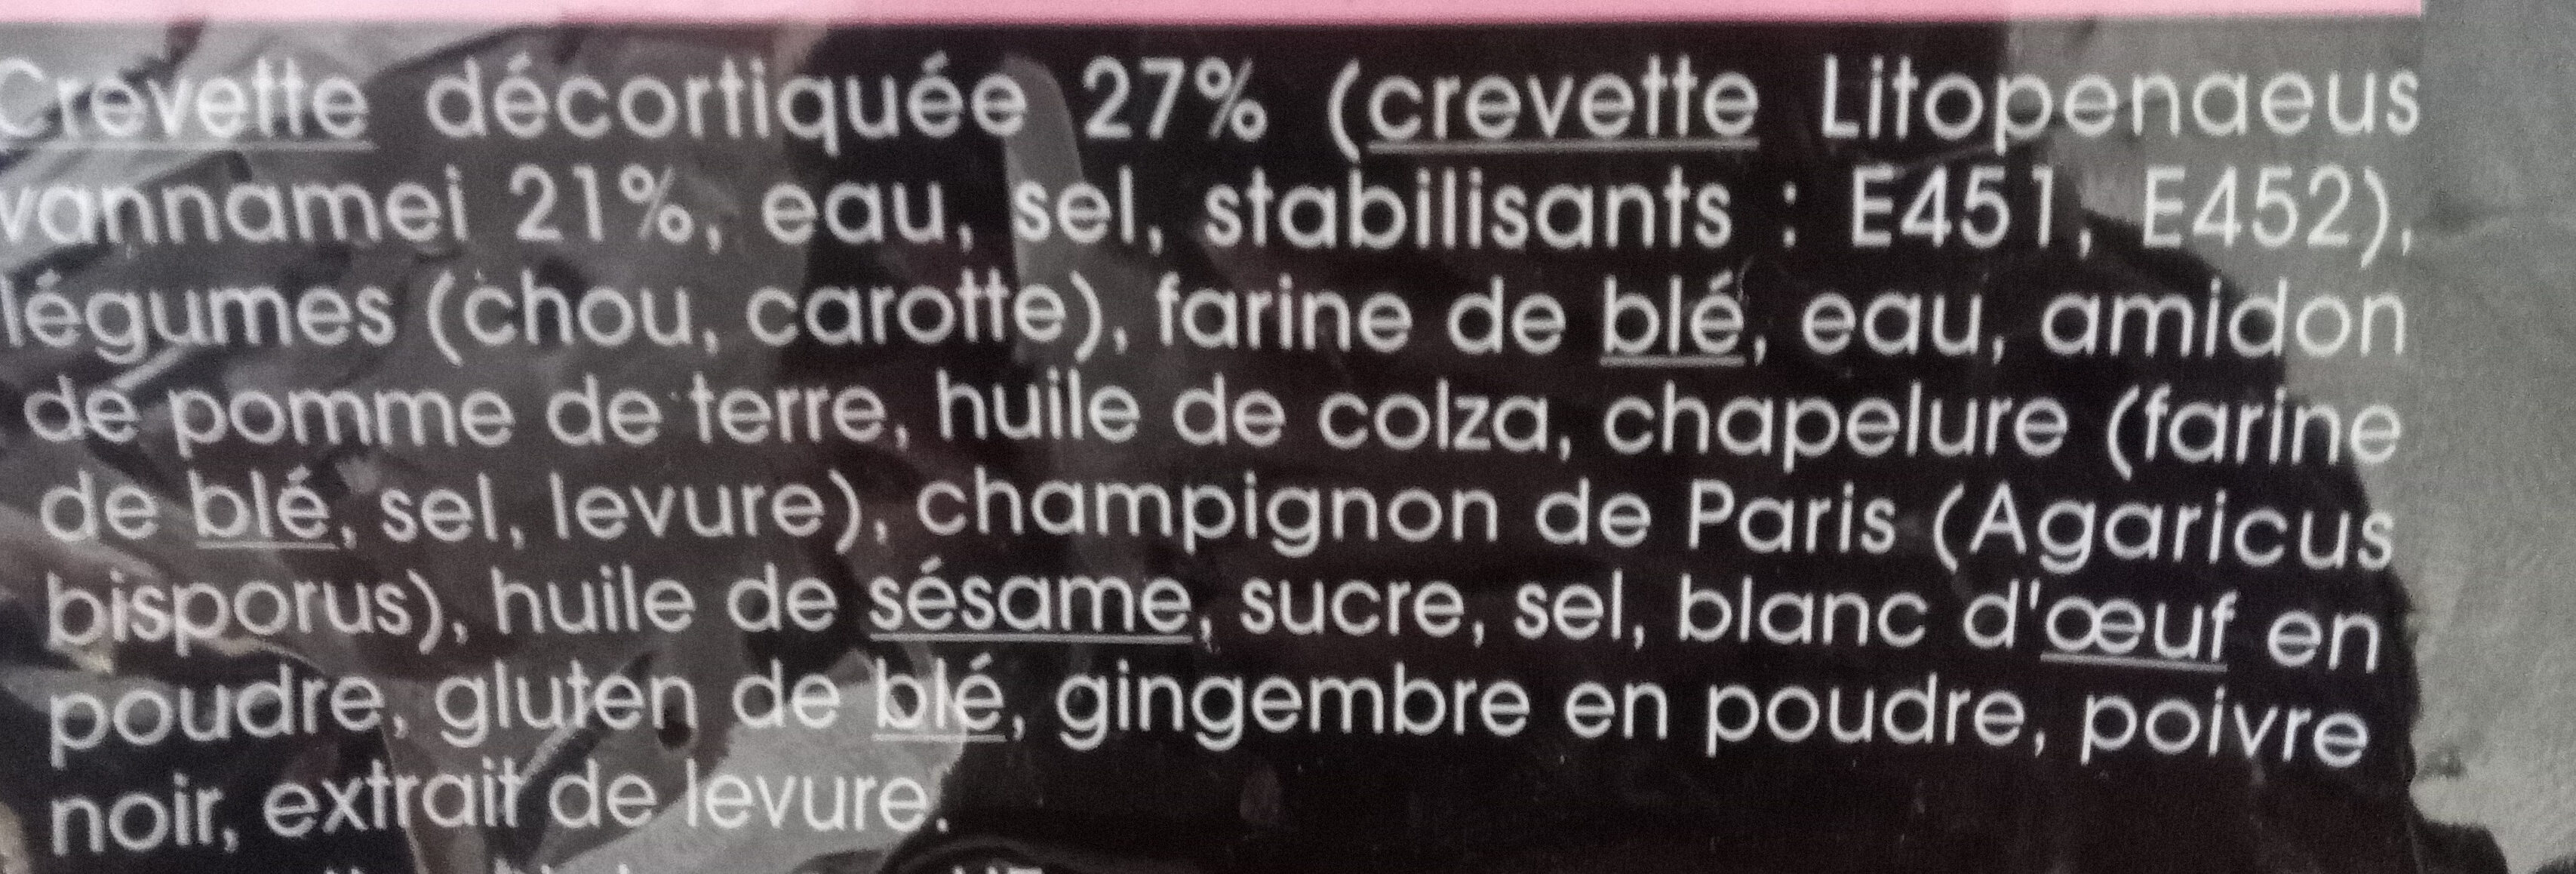 Gyoza crevettes - Ingrédients